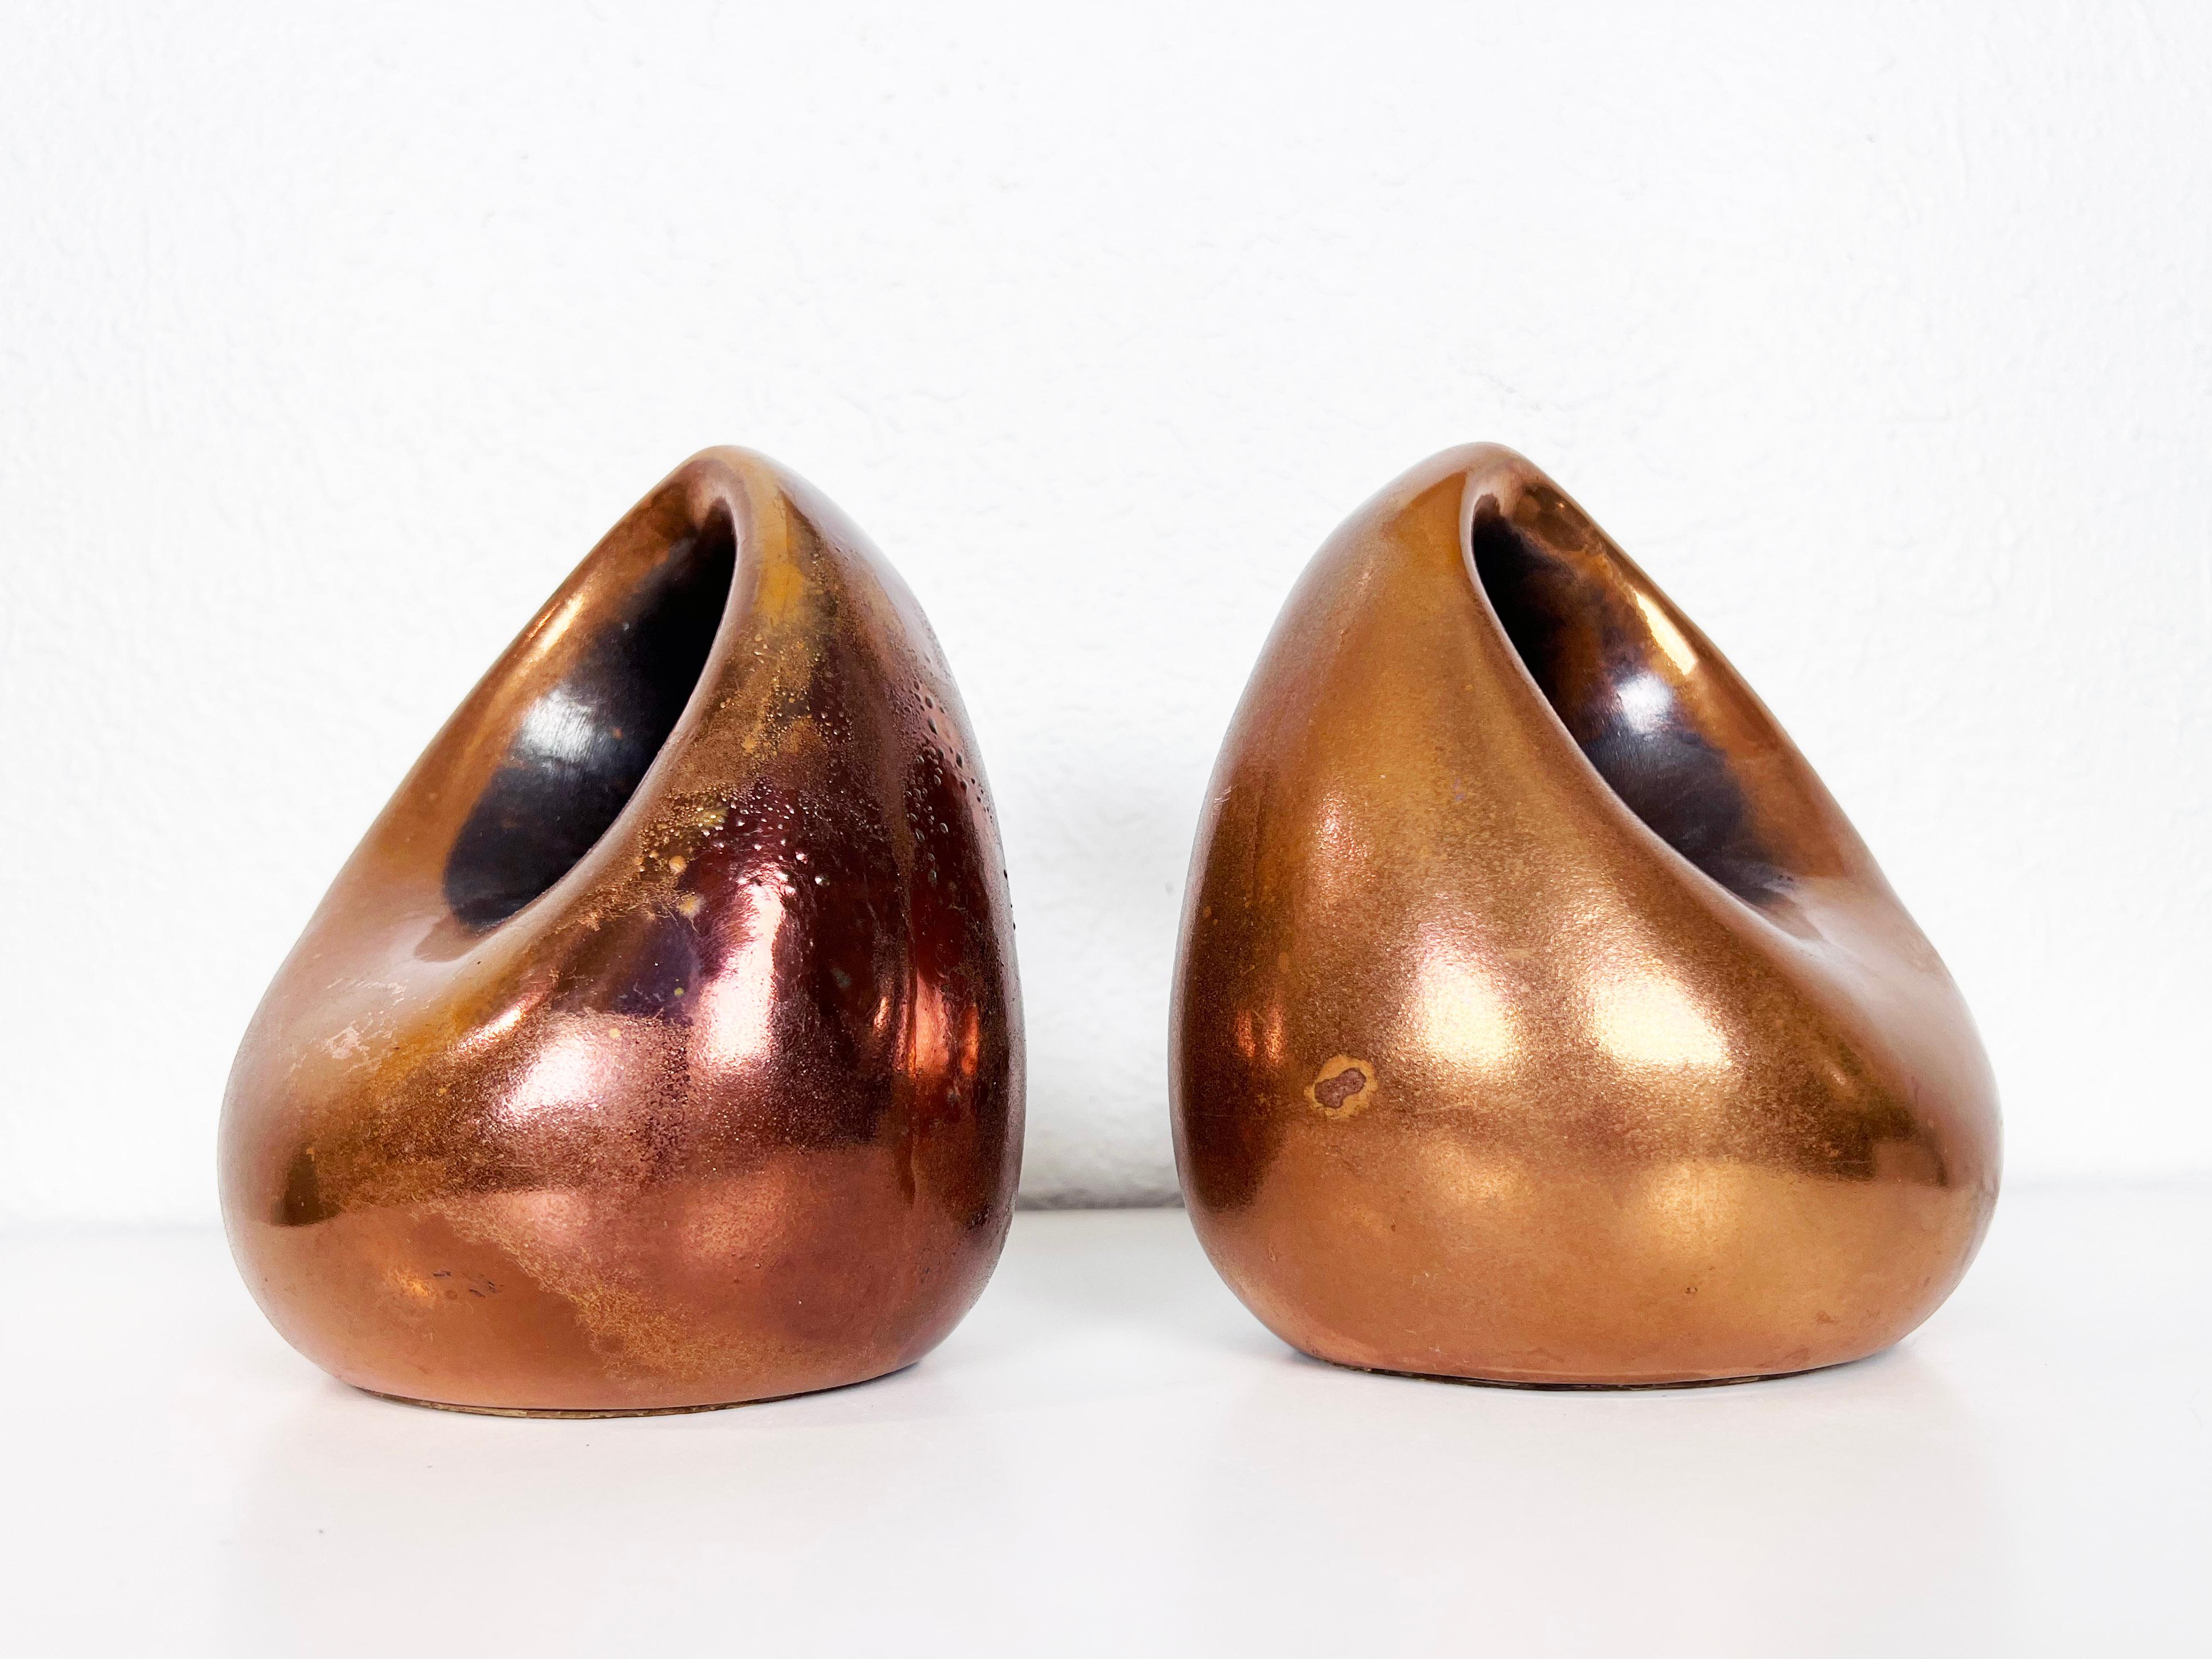 A pair of vintage sculptural copper bookends designed by Ben Seibel for Jenfred-Ware.